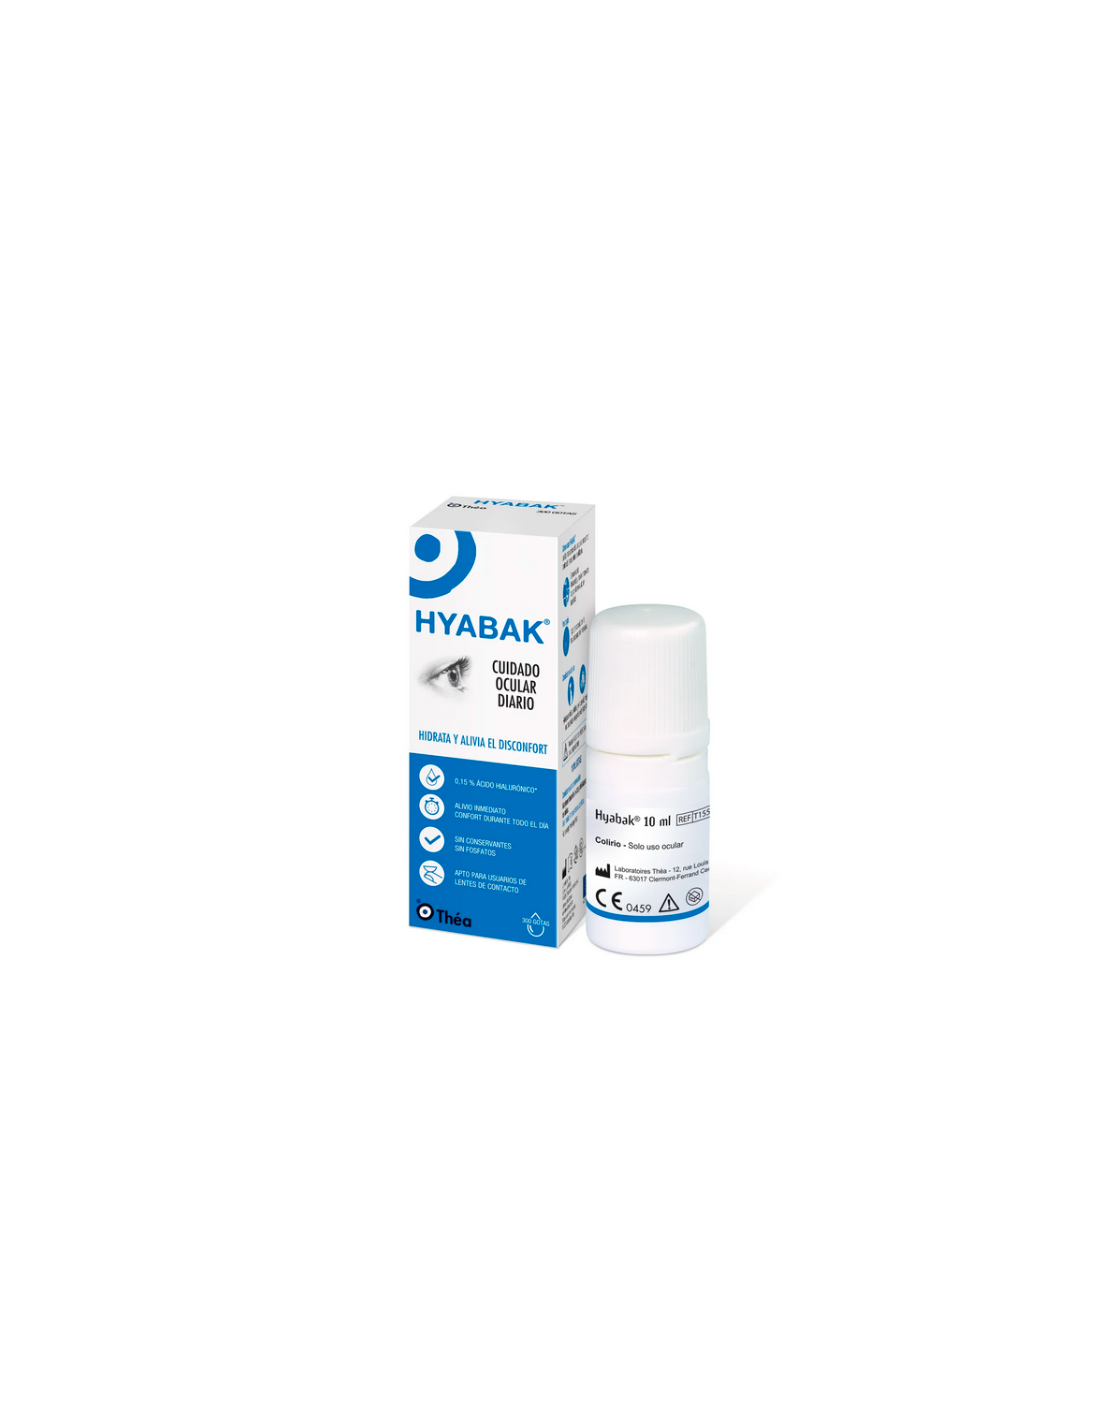 Hyabak Solución Hidratante Ocular, 10 ml